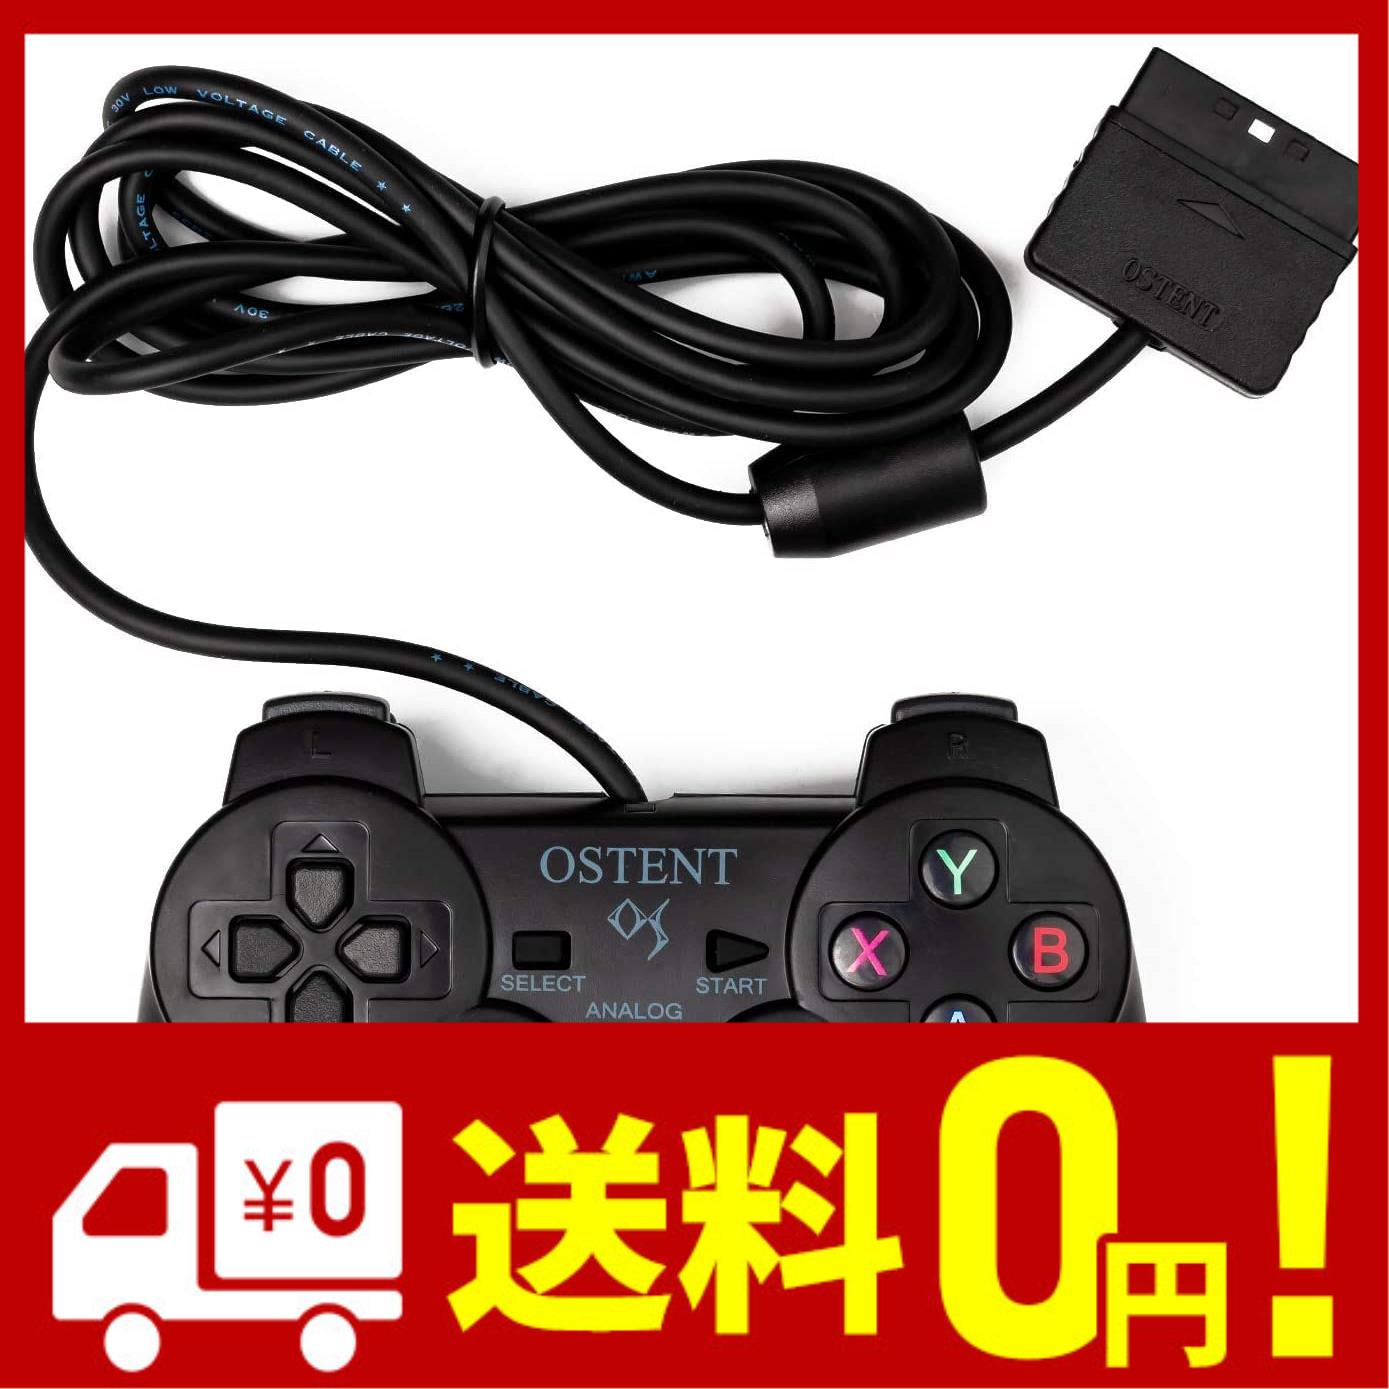 OSTENT コントローラー 有線 アナログ ゲームパッド ジョイスティック ジョイパッド Sony プレイステーション PS2 PS1 PS One PSX コンソ